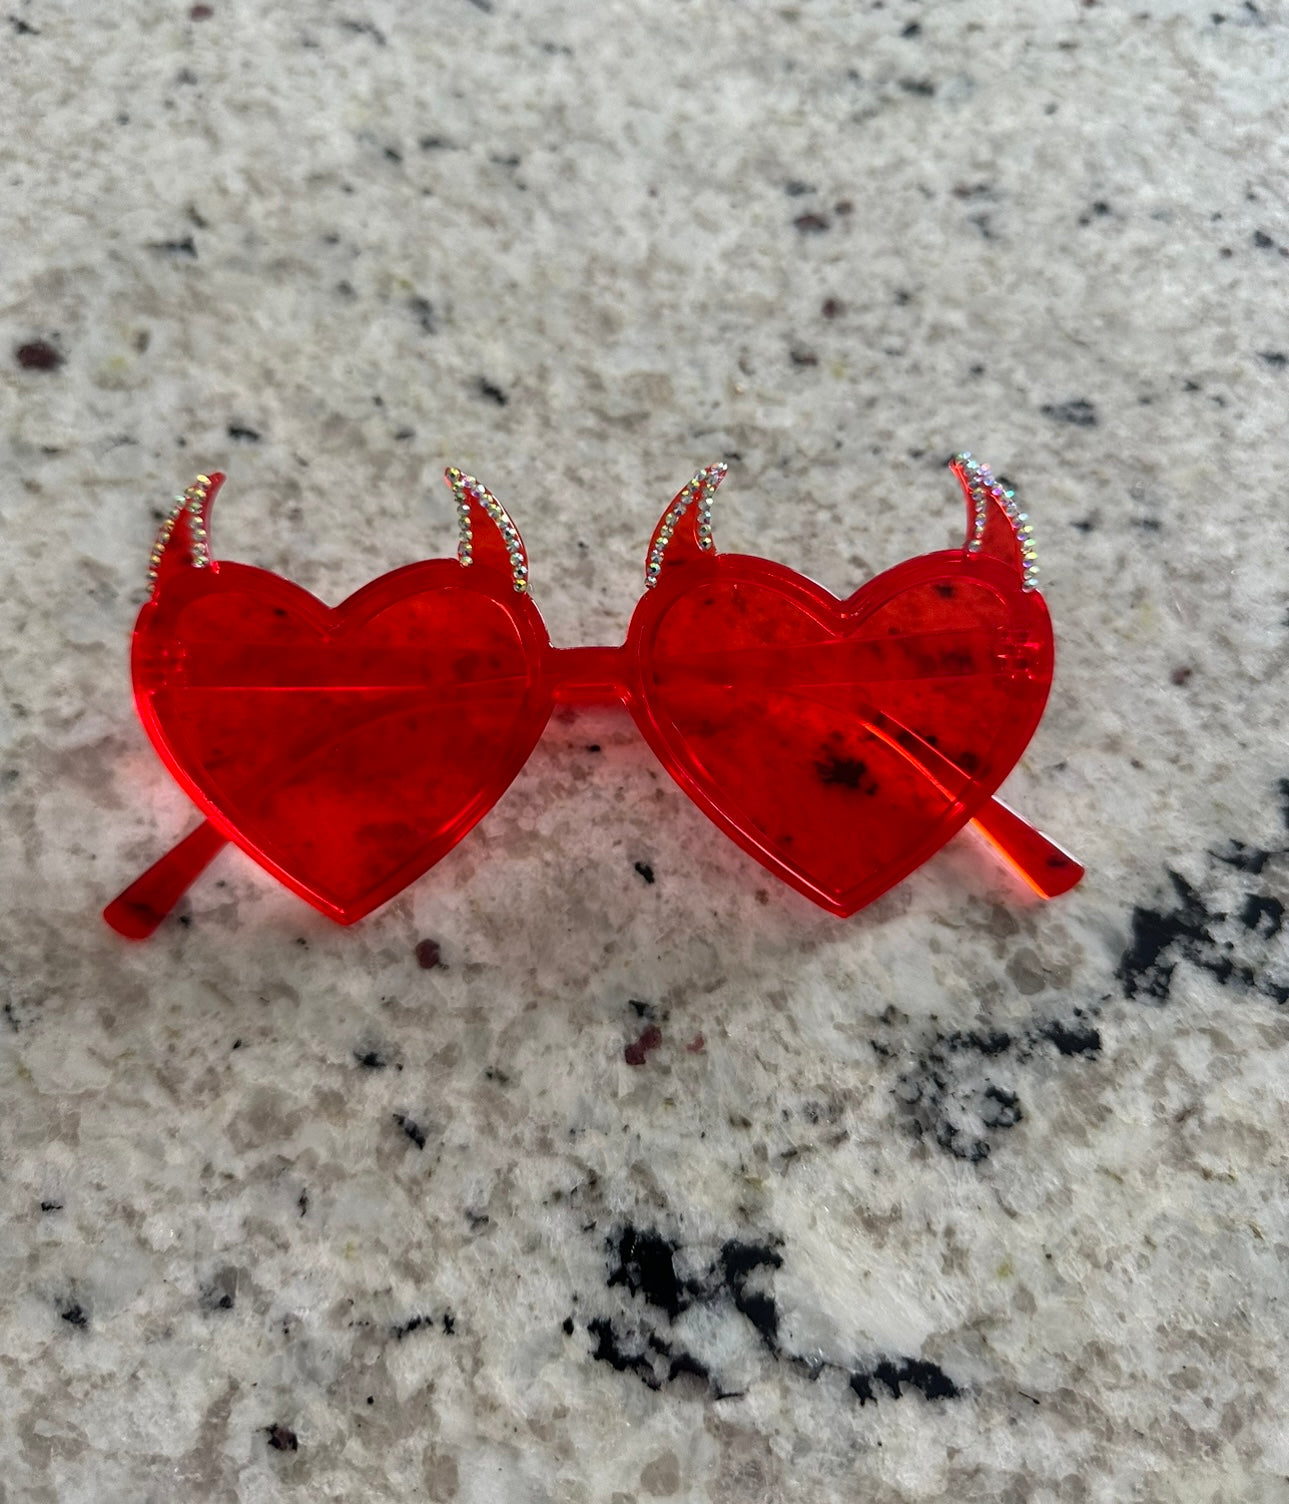 Red Devil fancy dress novelty sunglasses Halloween